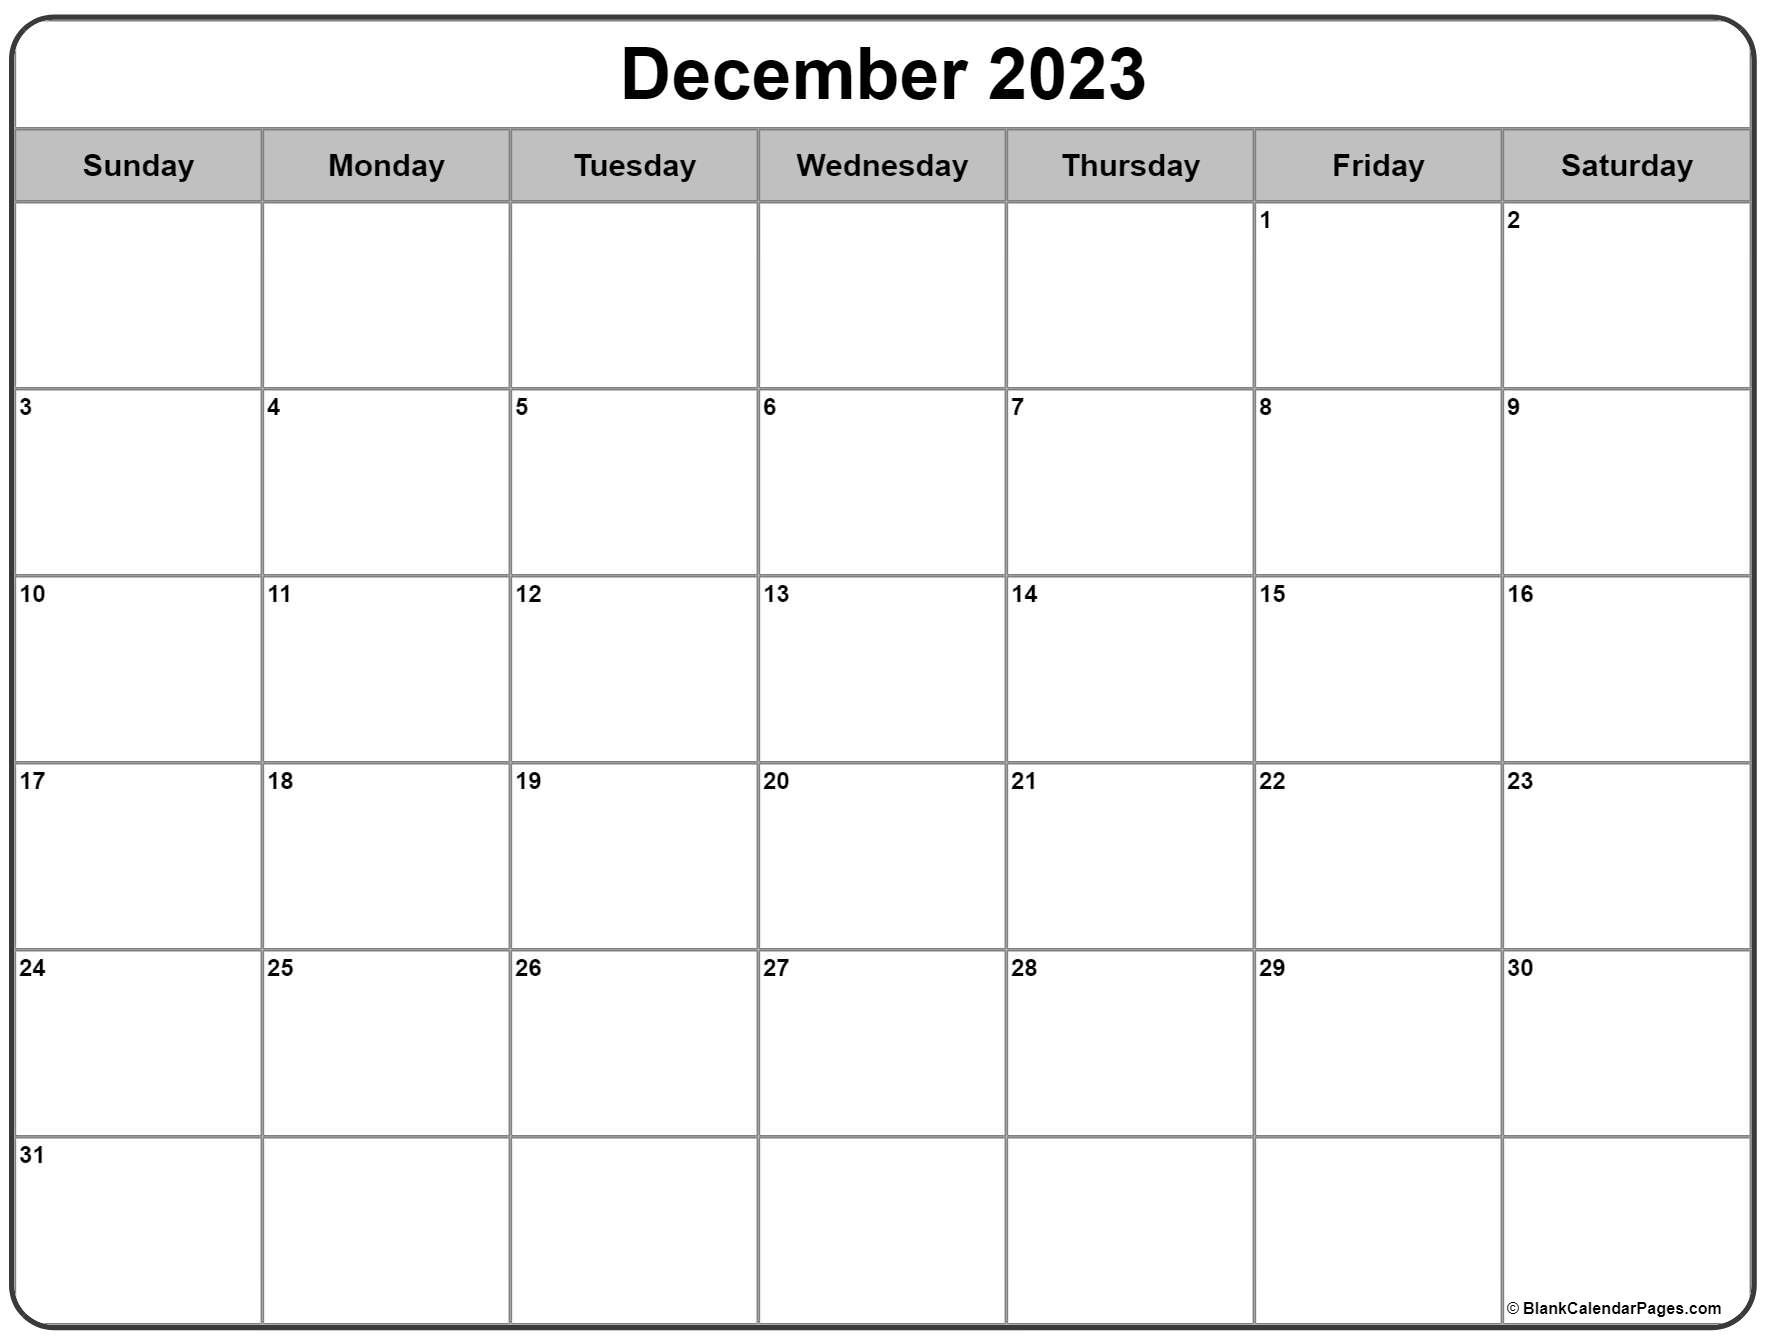 free-printable-calendar-december-2023-printable-world-holiday